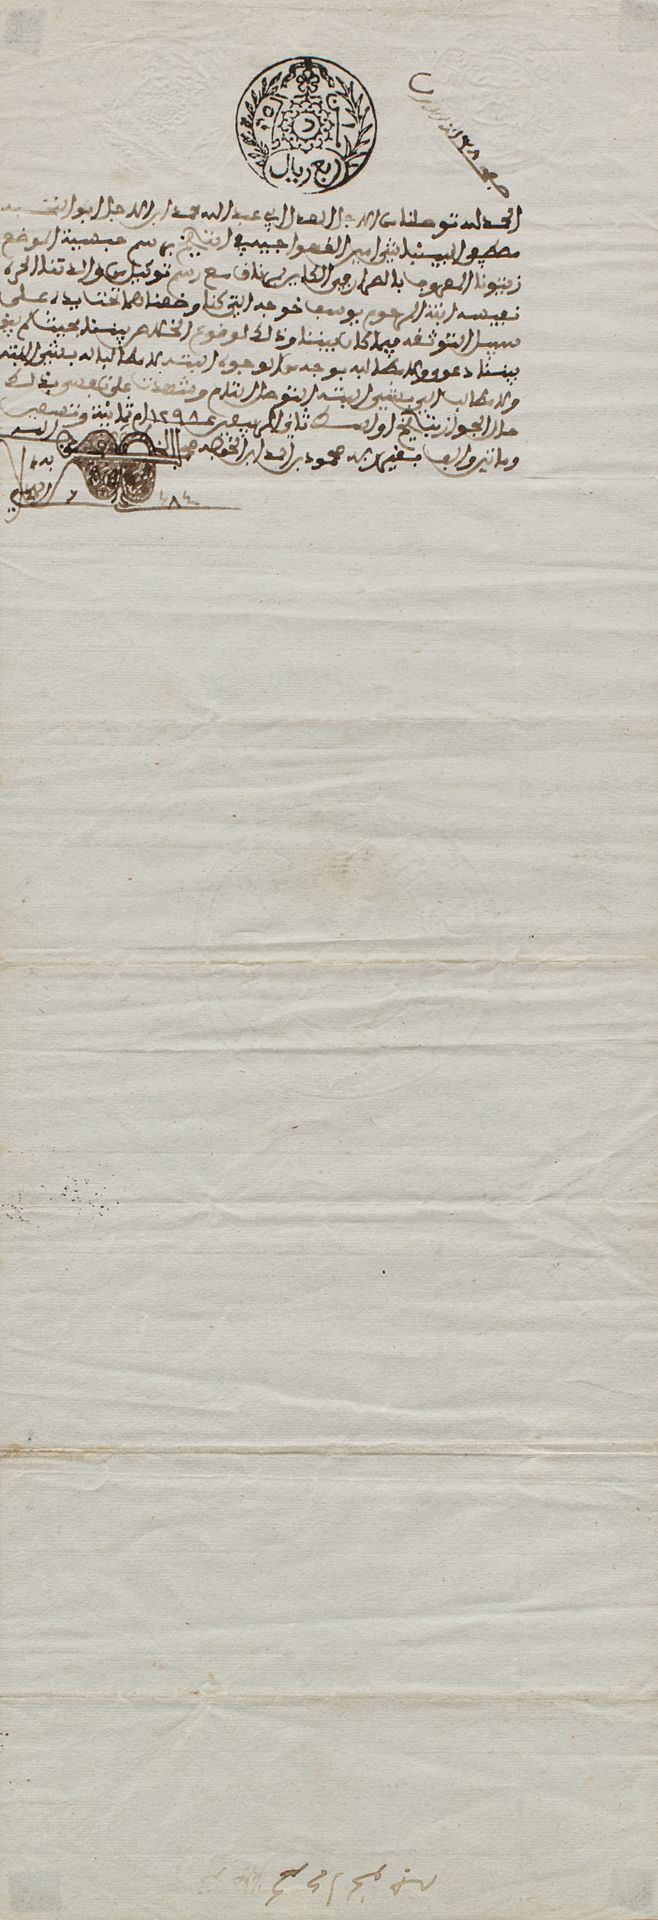 Contrat de vente 突尼斯，19世纪末

水印纸上的阿拉伯文手稿，用棕色墨水在每页9行上书写马格里布的书法。水印显示日期为1284H。(=1867&hellip;